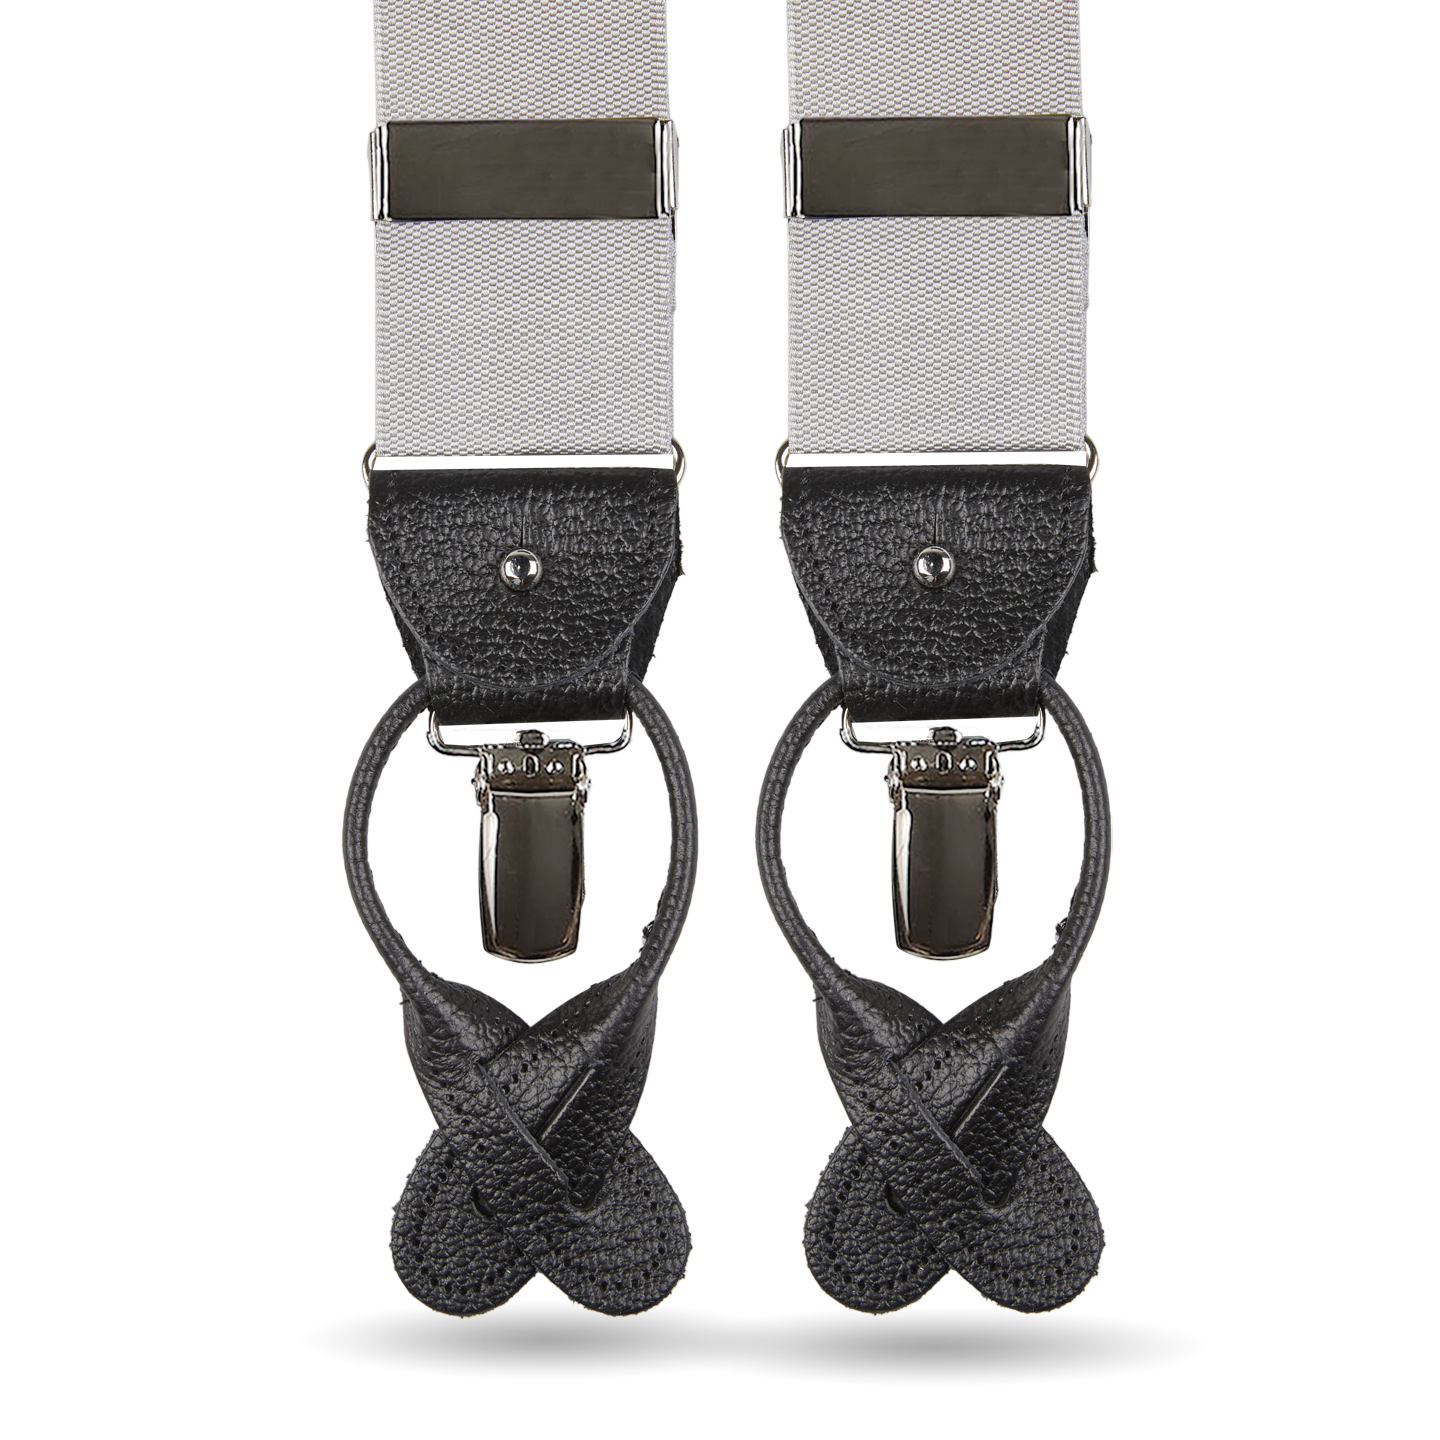 Jacob Alexander Men's Argyle Y-Back Suspenders Braces Convertible Leather  Ends Clips - Black Grey at Amazon Men's Clothing store